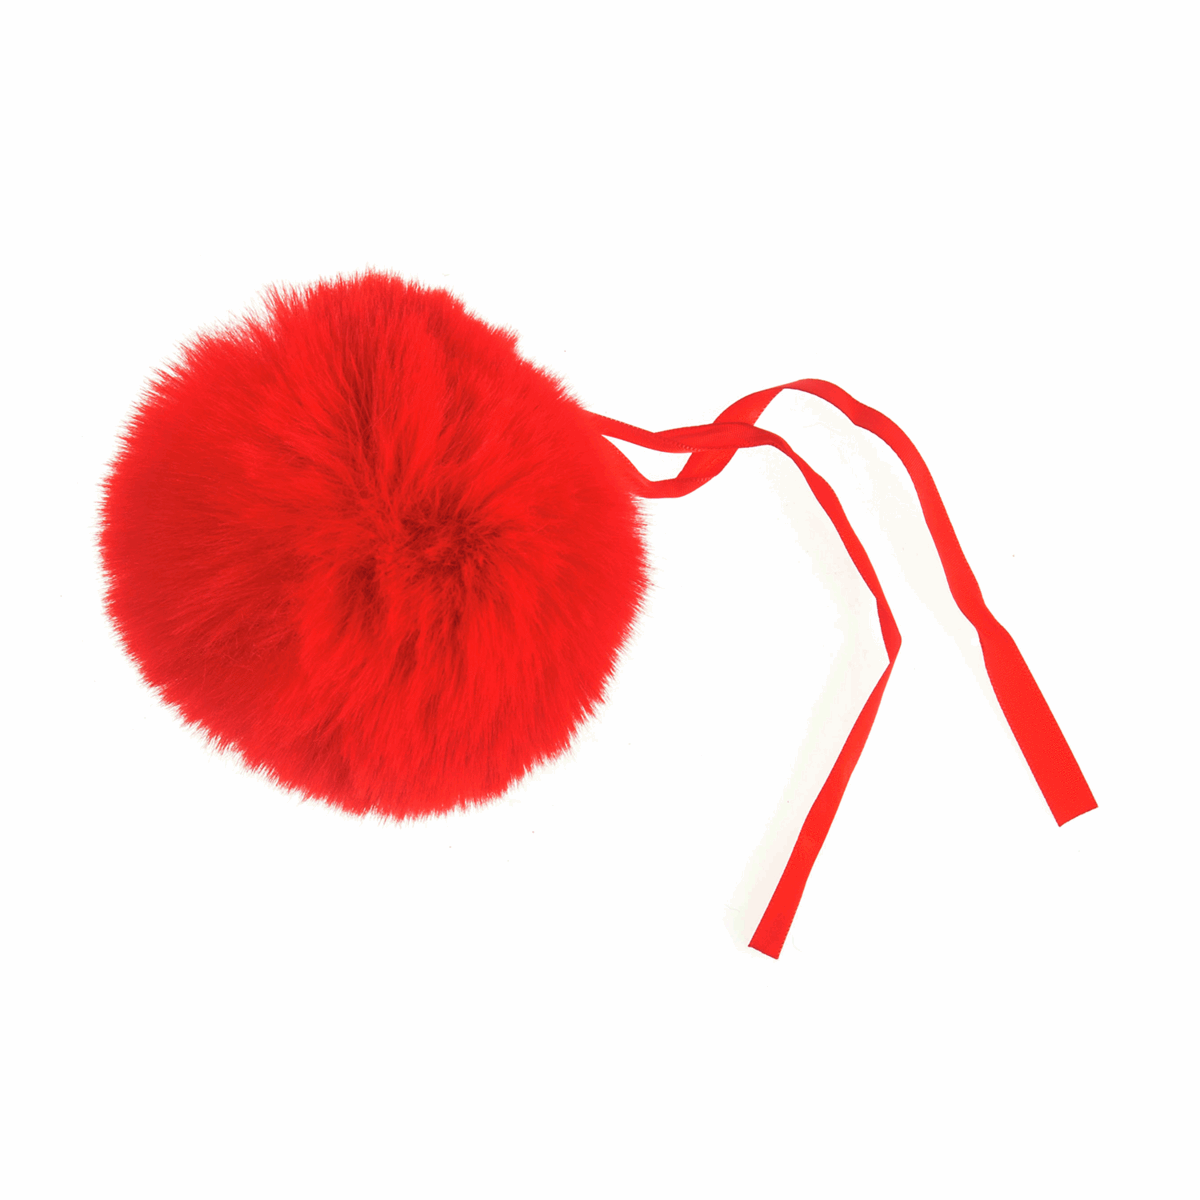 Trimits Faux Fur Super Fluffy Pom Pom - Red 11cm (Large)